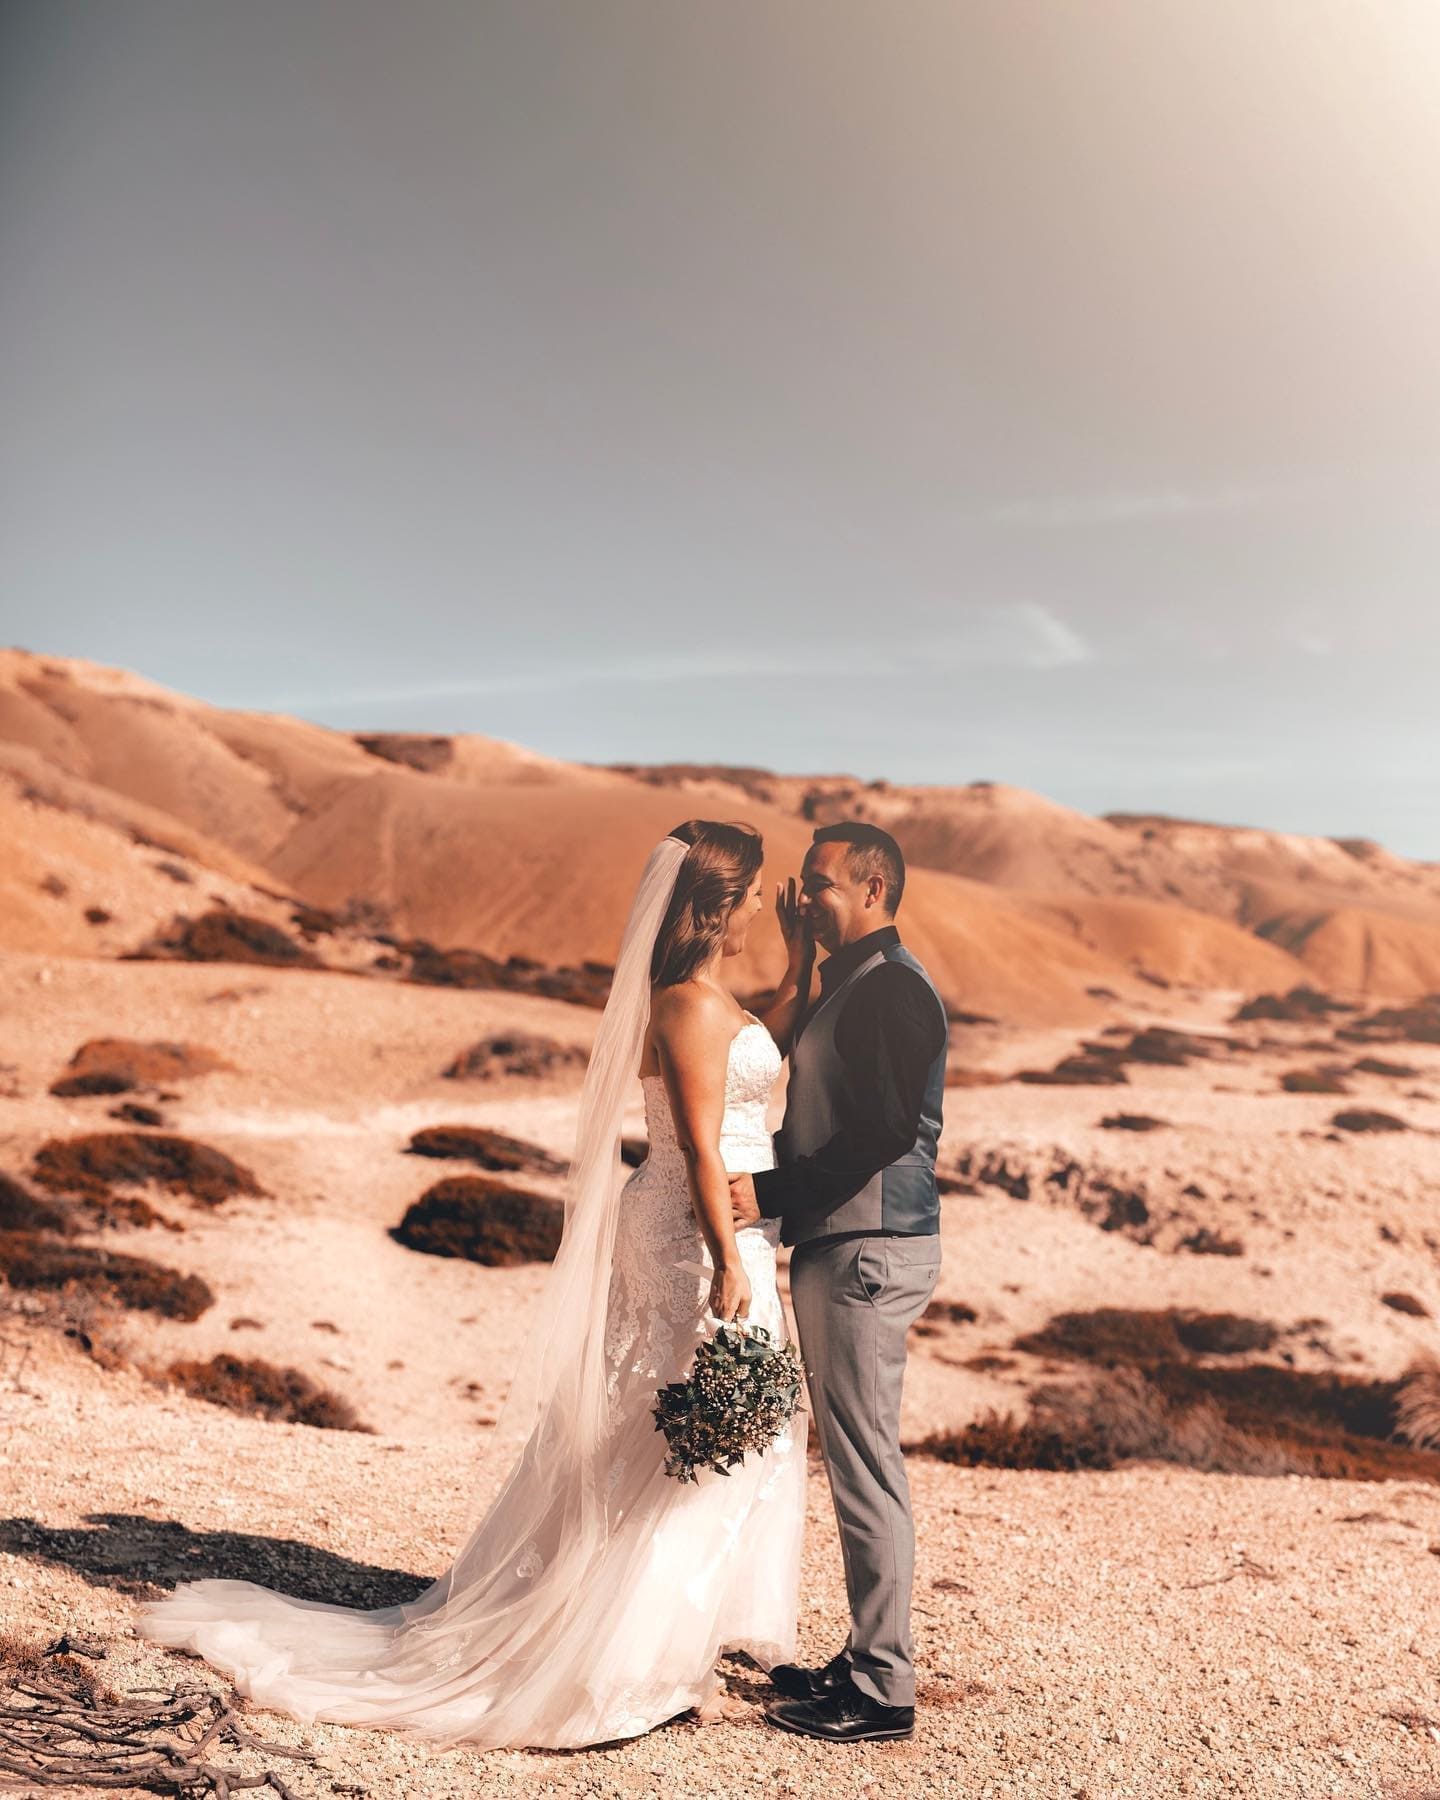 Wedding Photography Videography Adelaide Media Inc